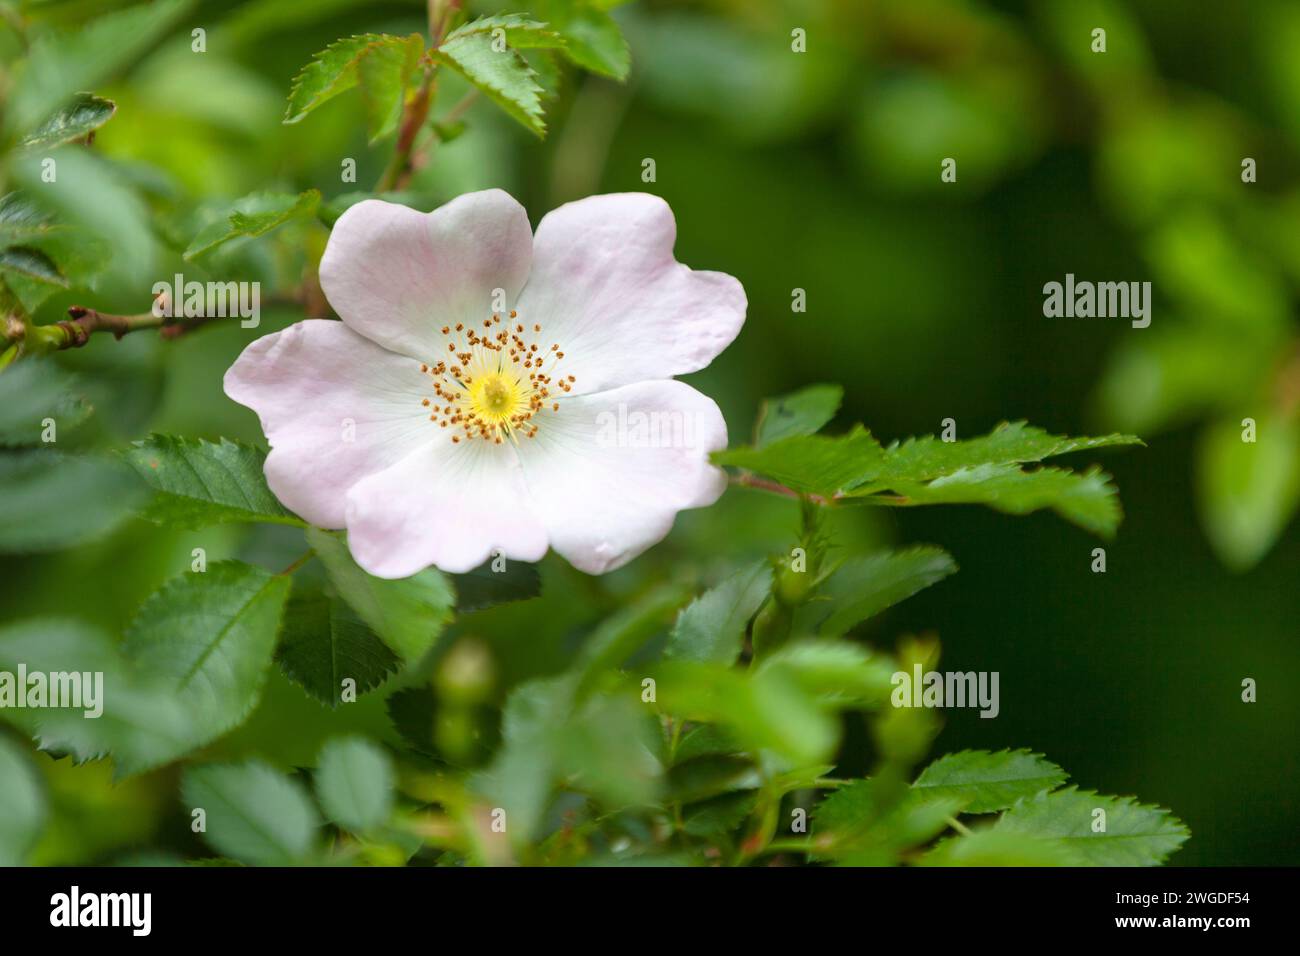 Close-up on a dog rose flower (Rosa canina). Stock Photo